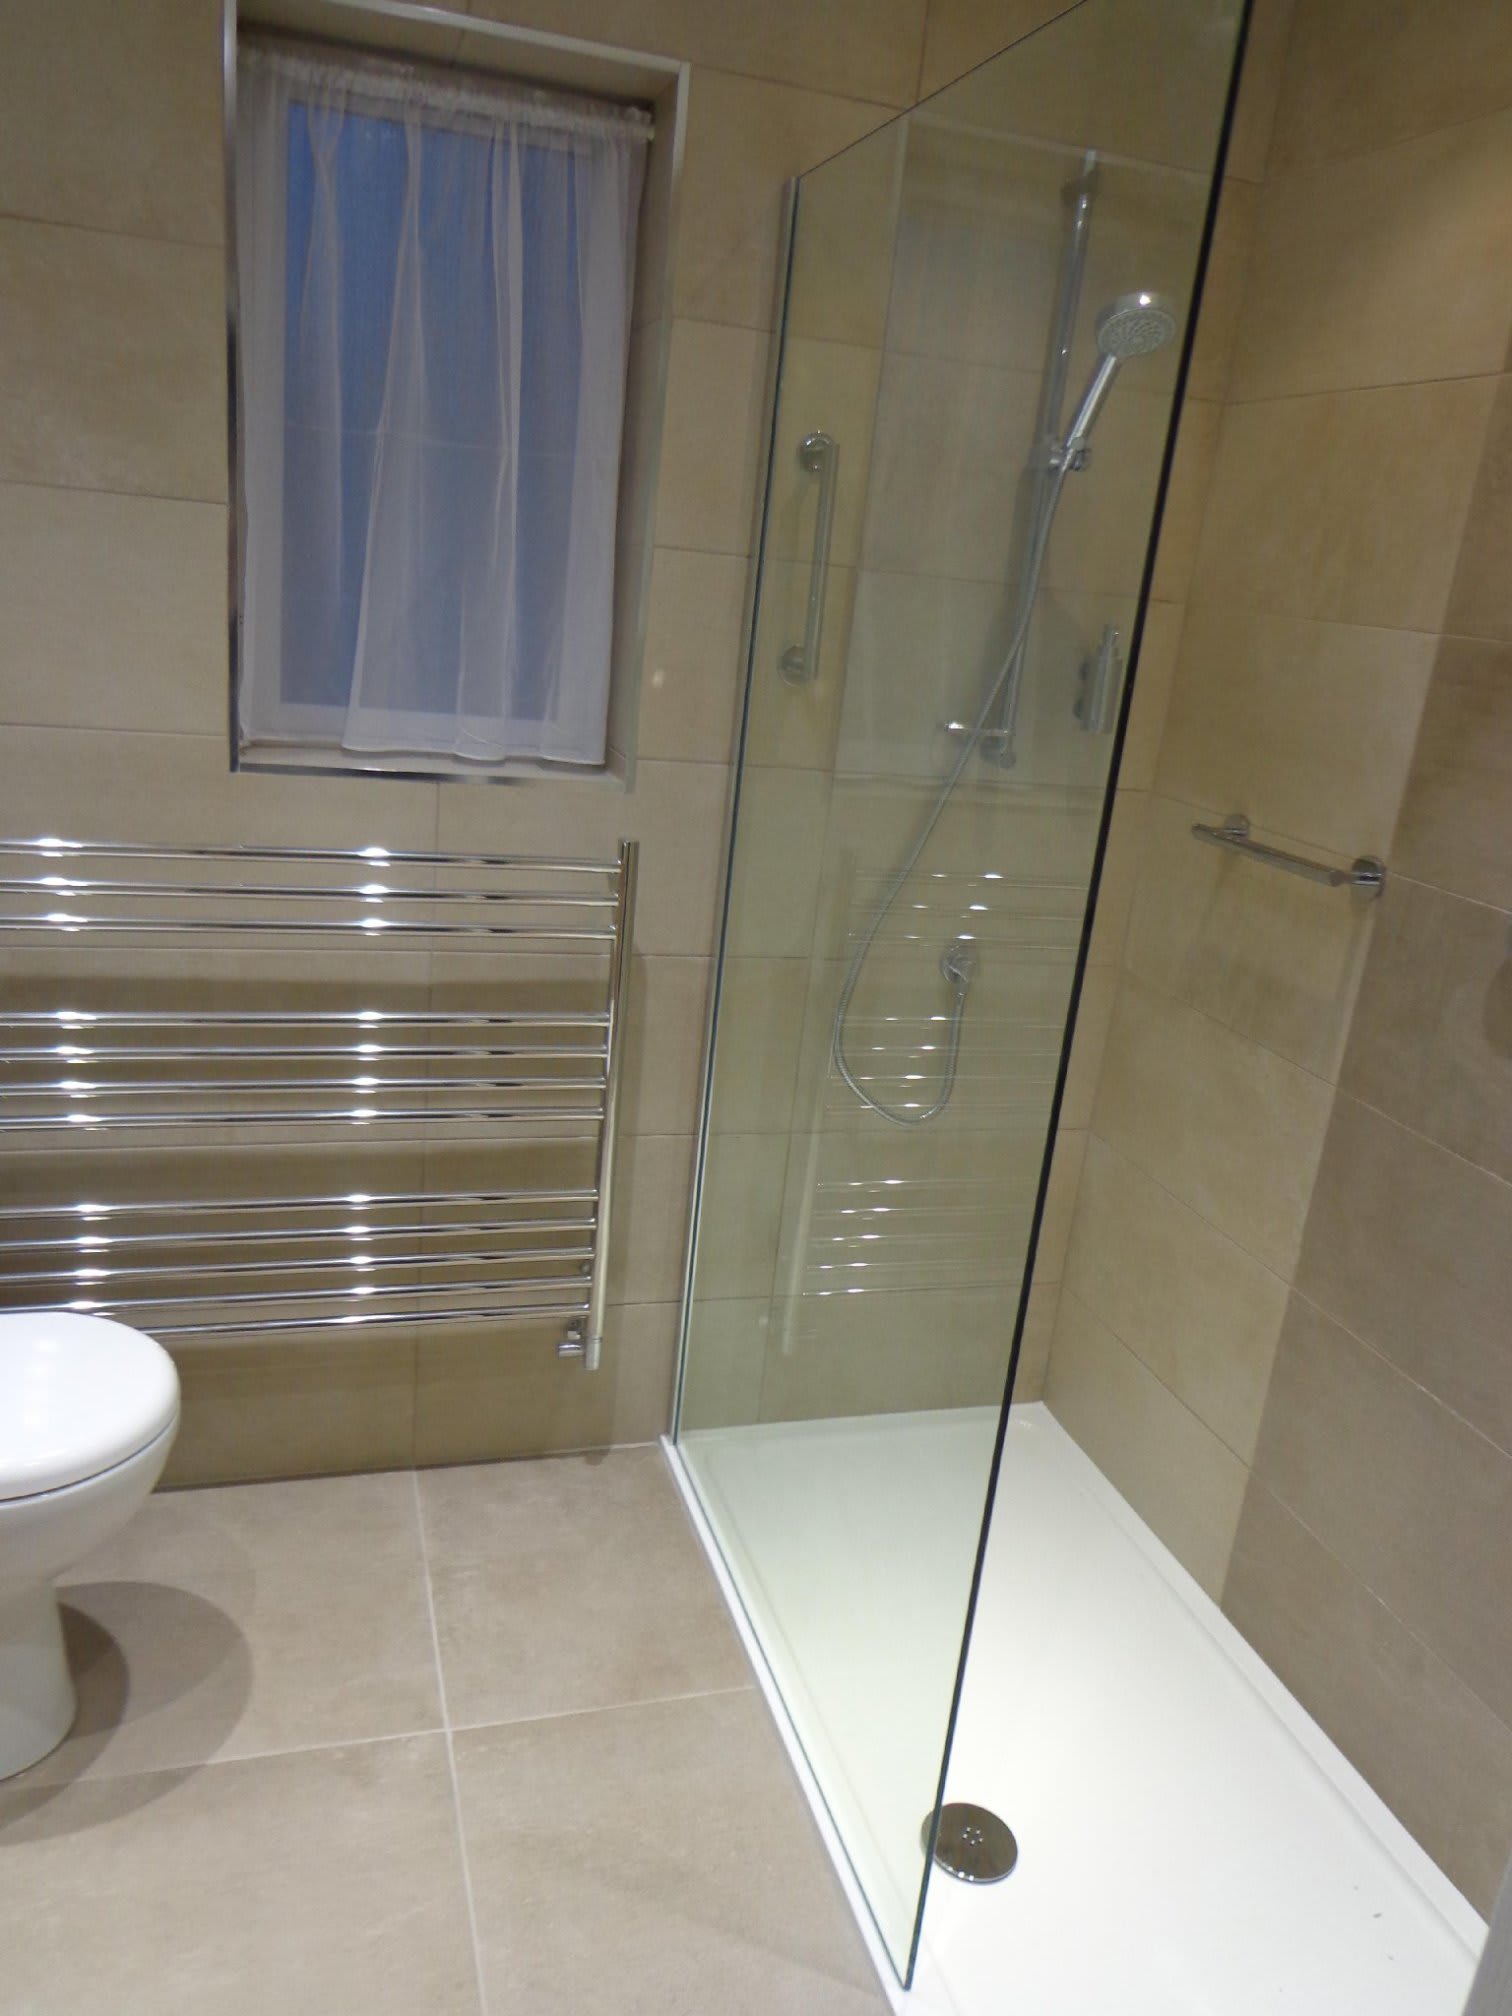 Lifestyle Bathrooms Ltd Stroud 01453 884167